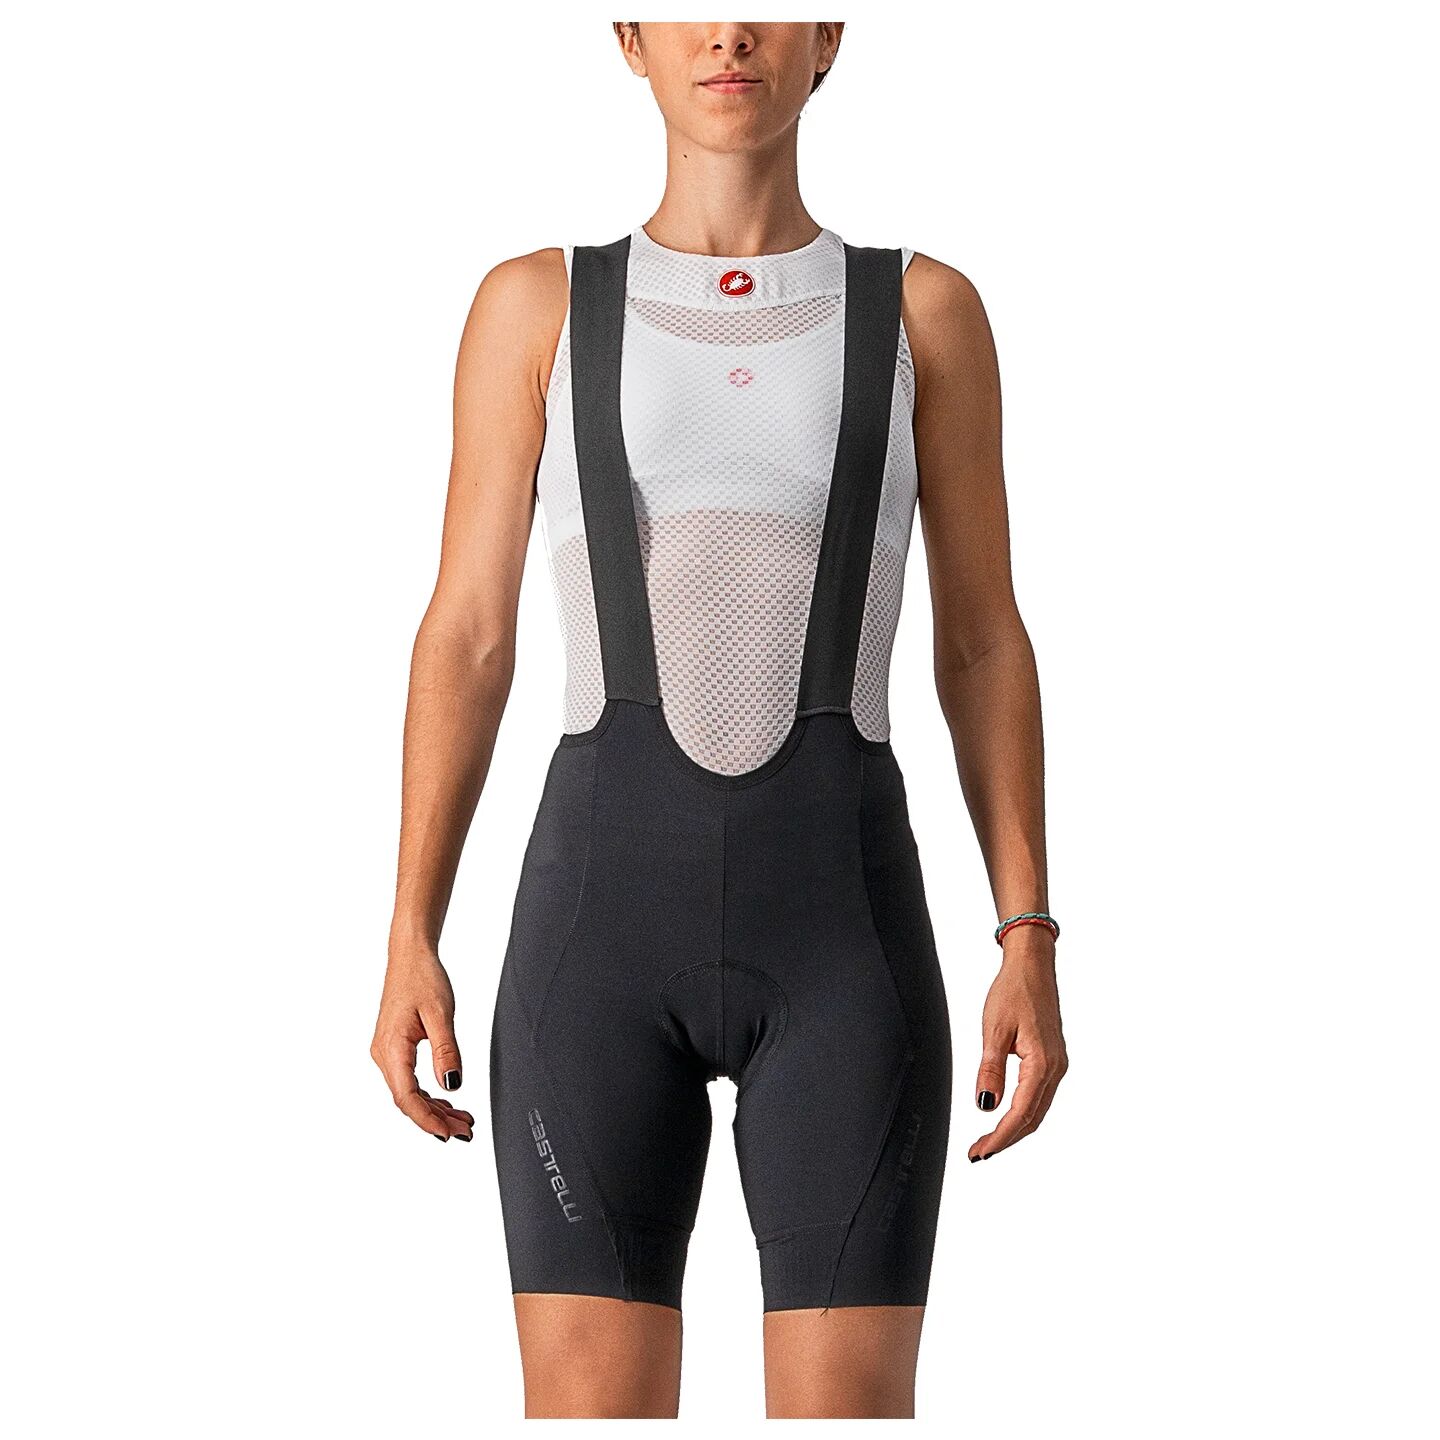 CASTELLI Velocissima 3 Women's Bib Shorts Women's Bib Shorts, size L, Cycle shorts, Cycling clothing